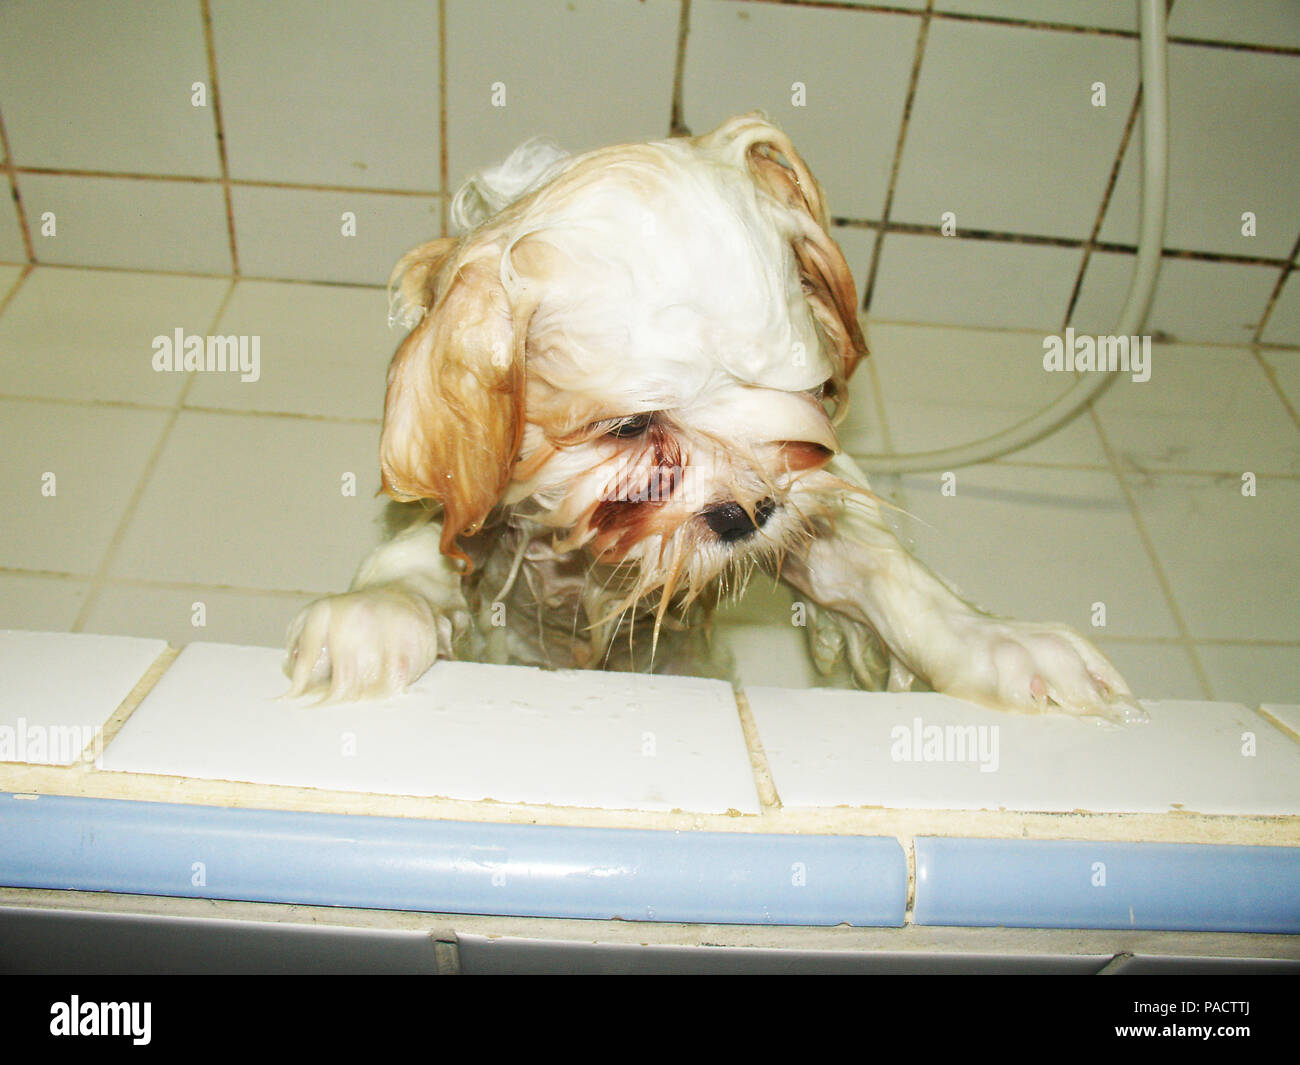 Hund Duschen, Lhasa Apso, São Paulo, Brasilien Stockfotografie - Alamy